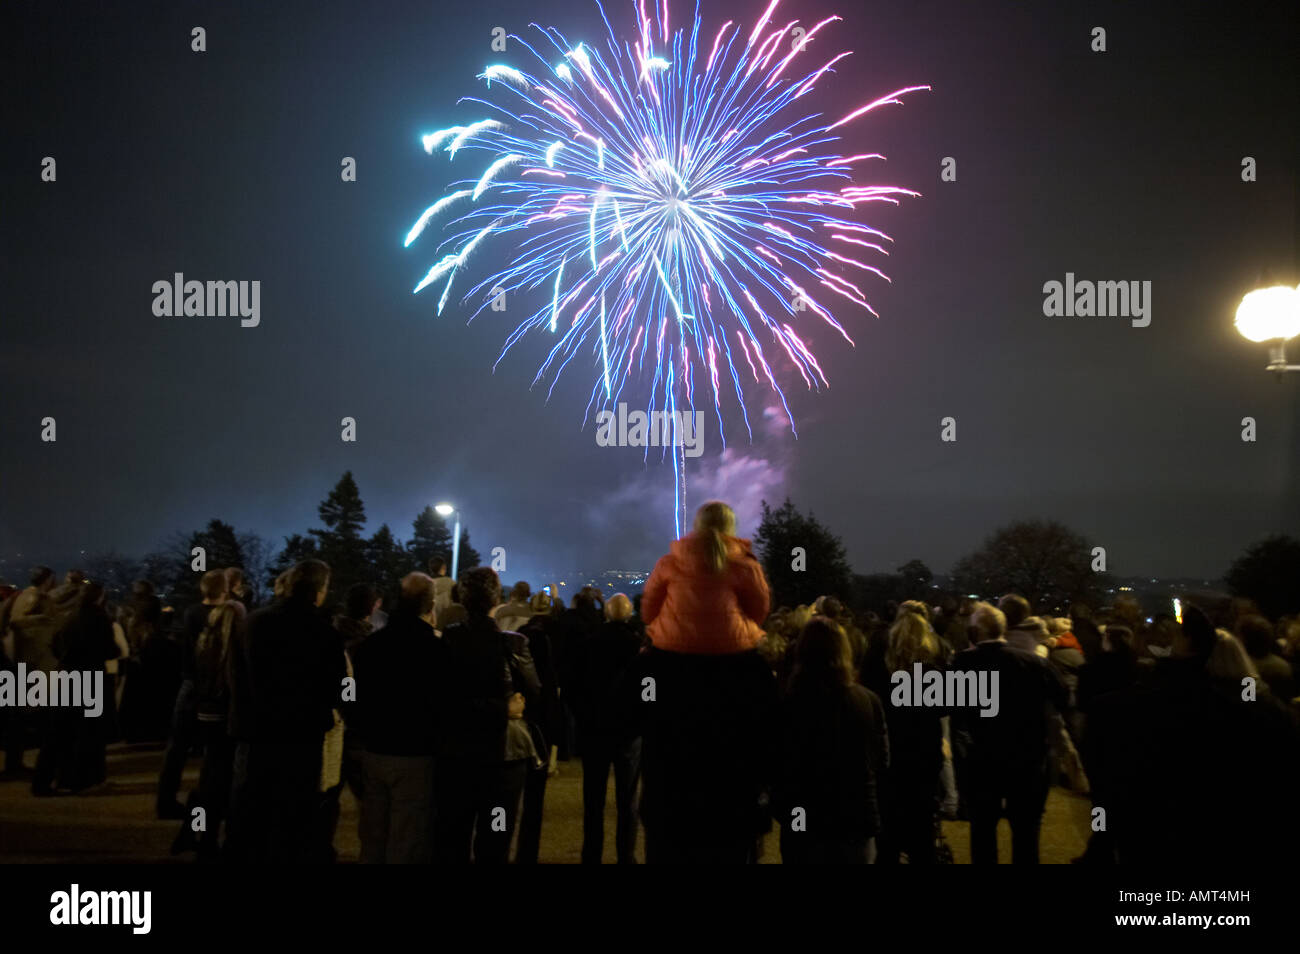 November 5th Guy Fawkes night fireworks show in London UK Stock Photo